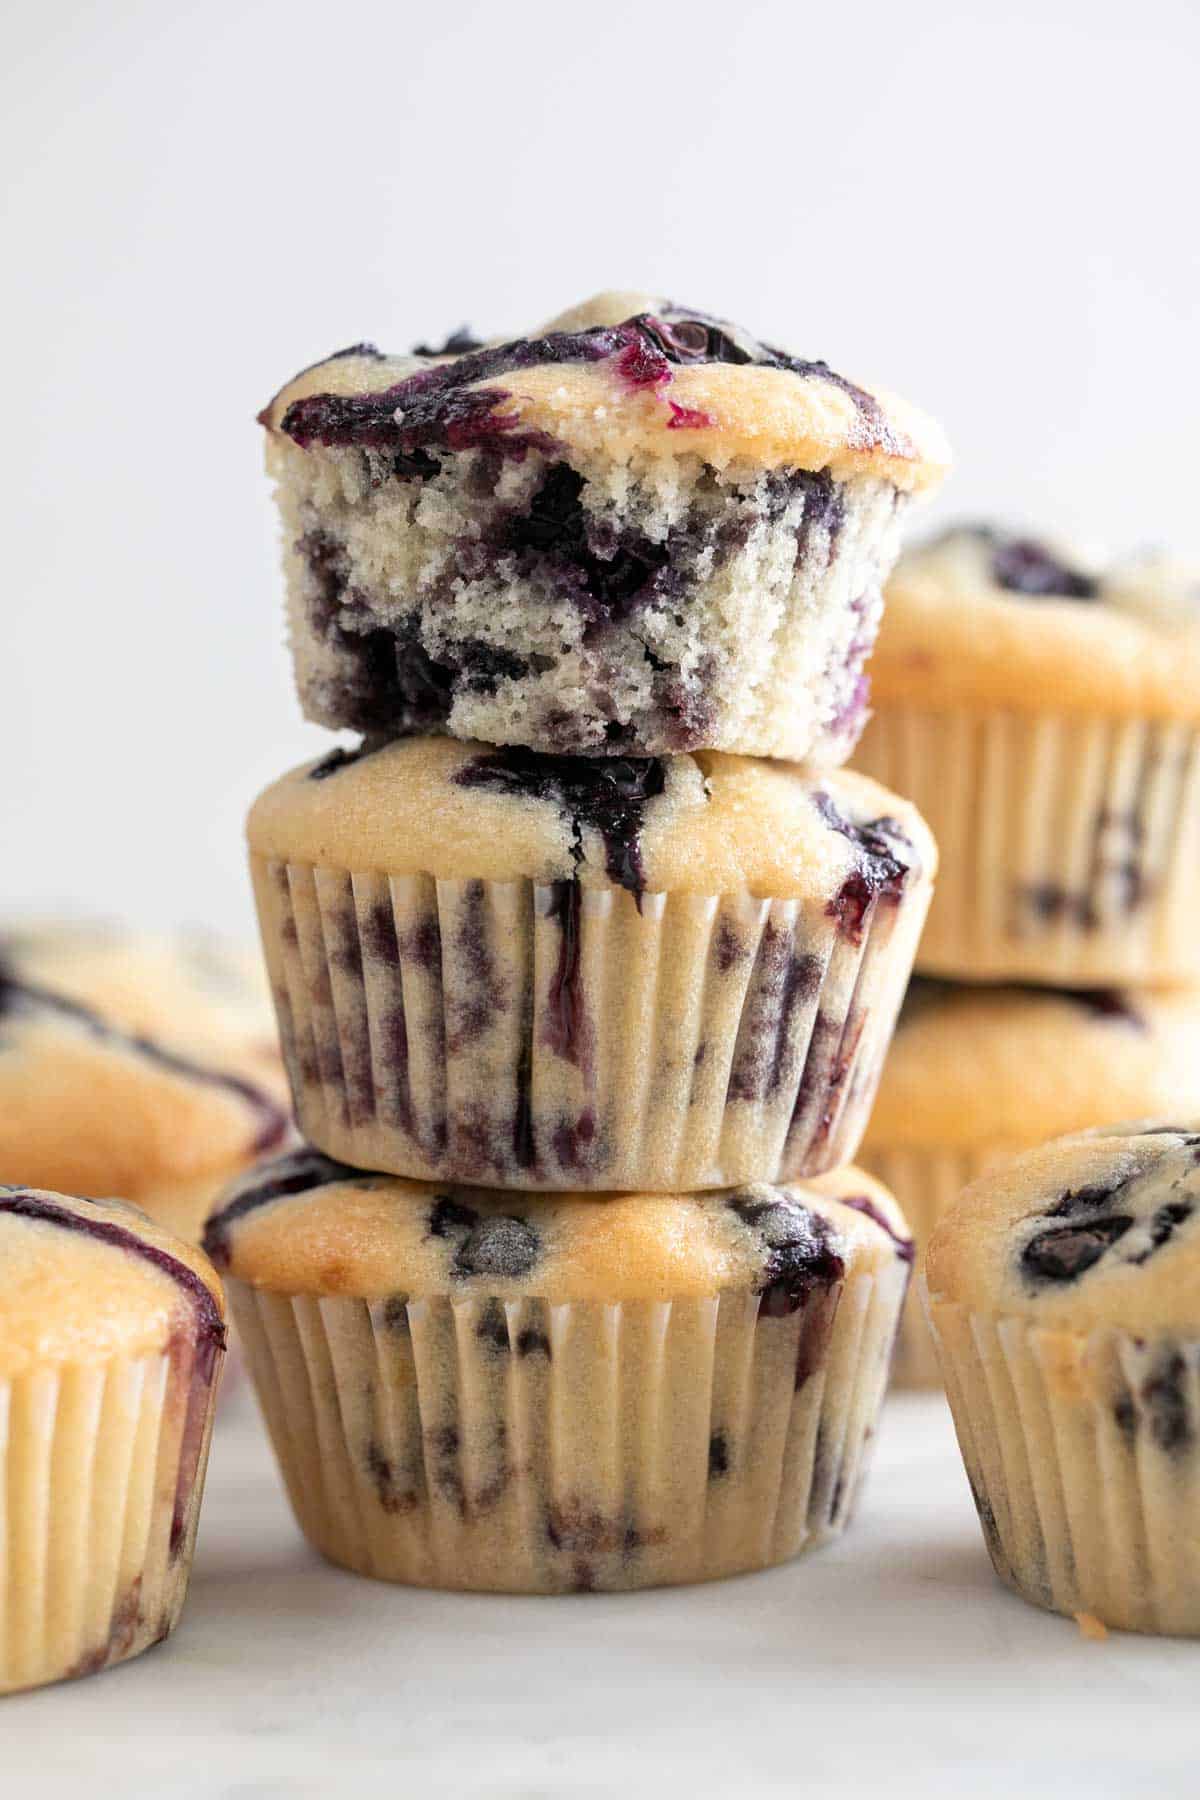 Stacked arrangement of three vegan blueberry muffins.